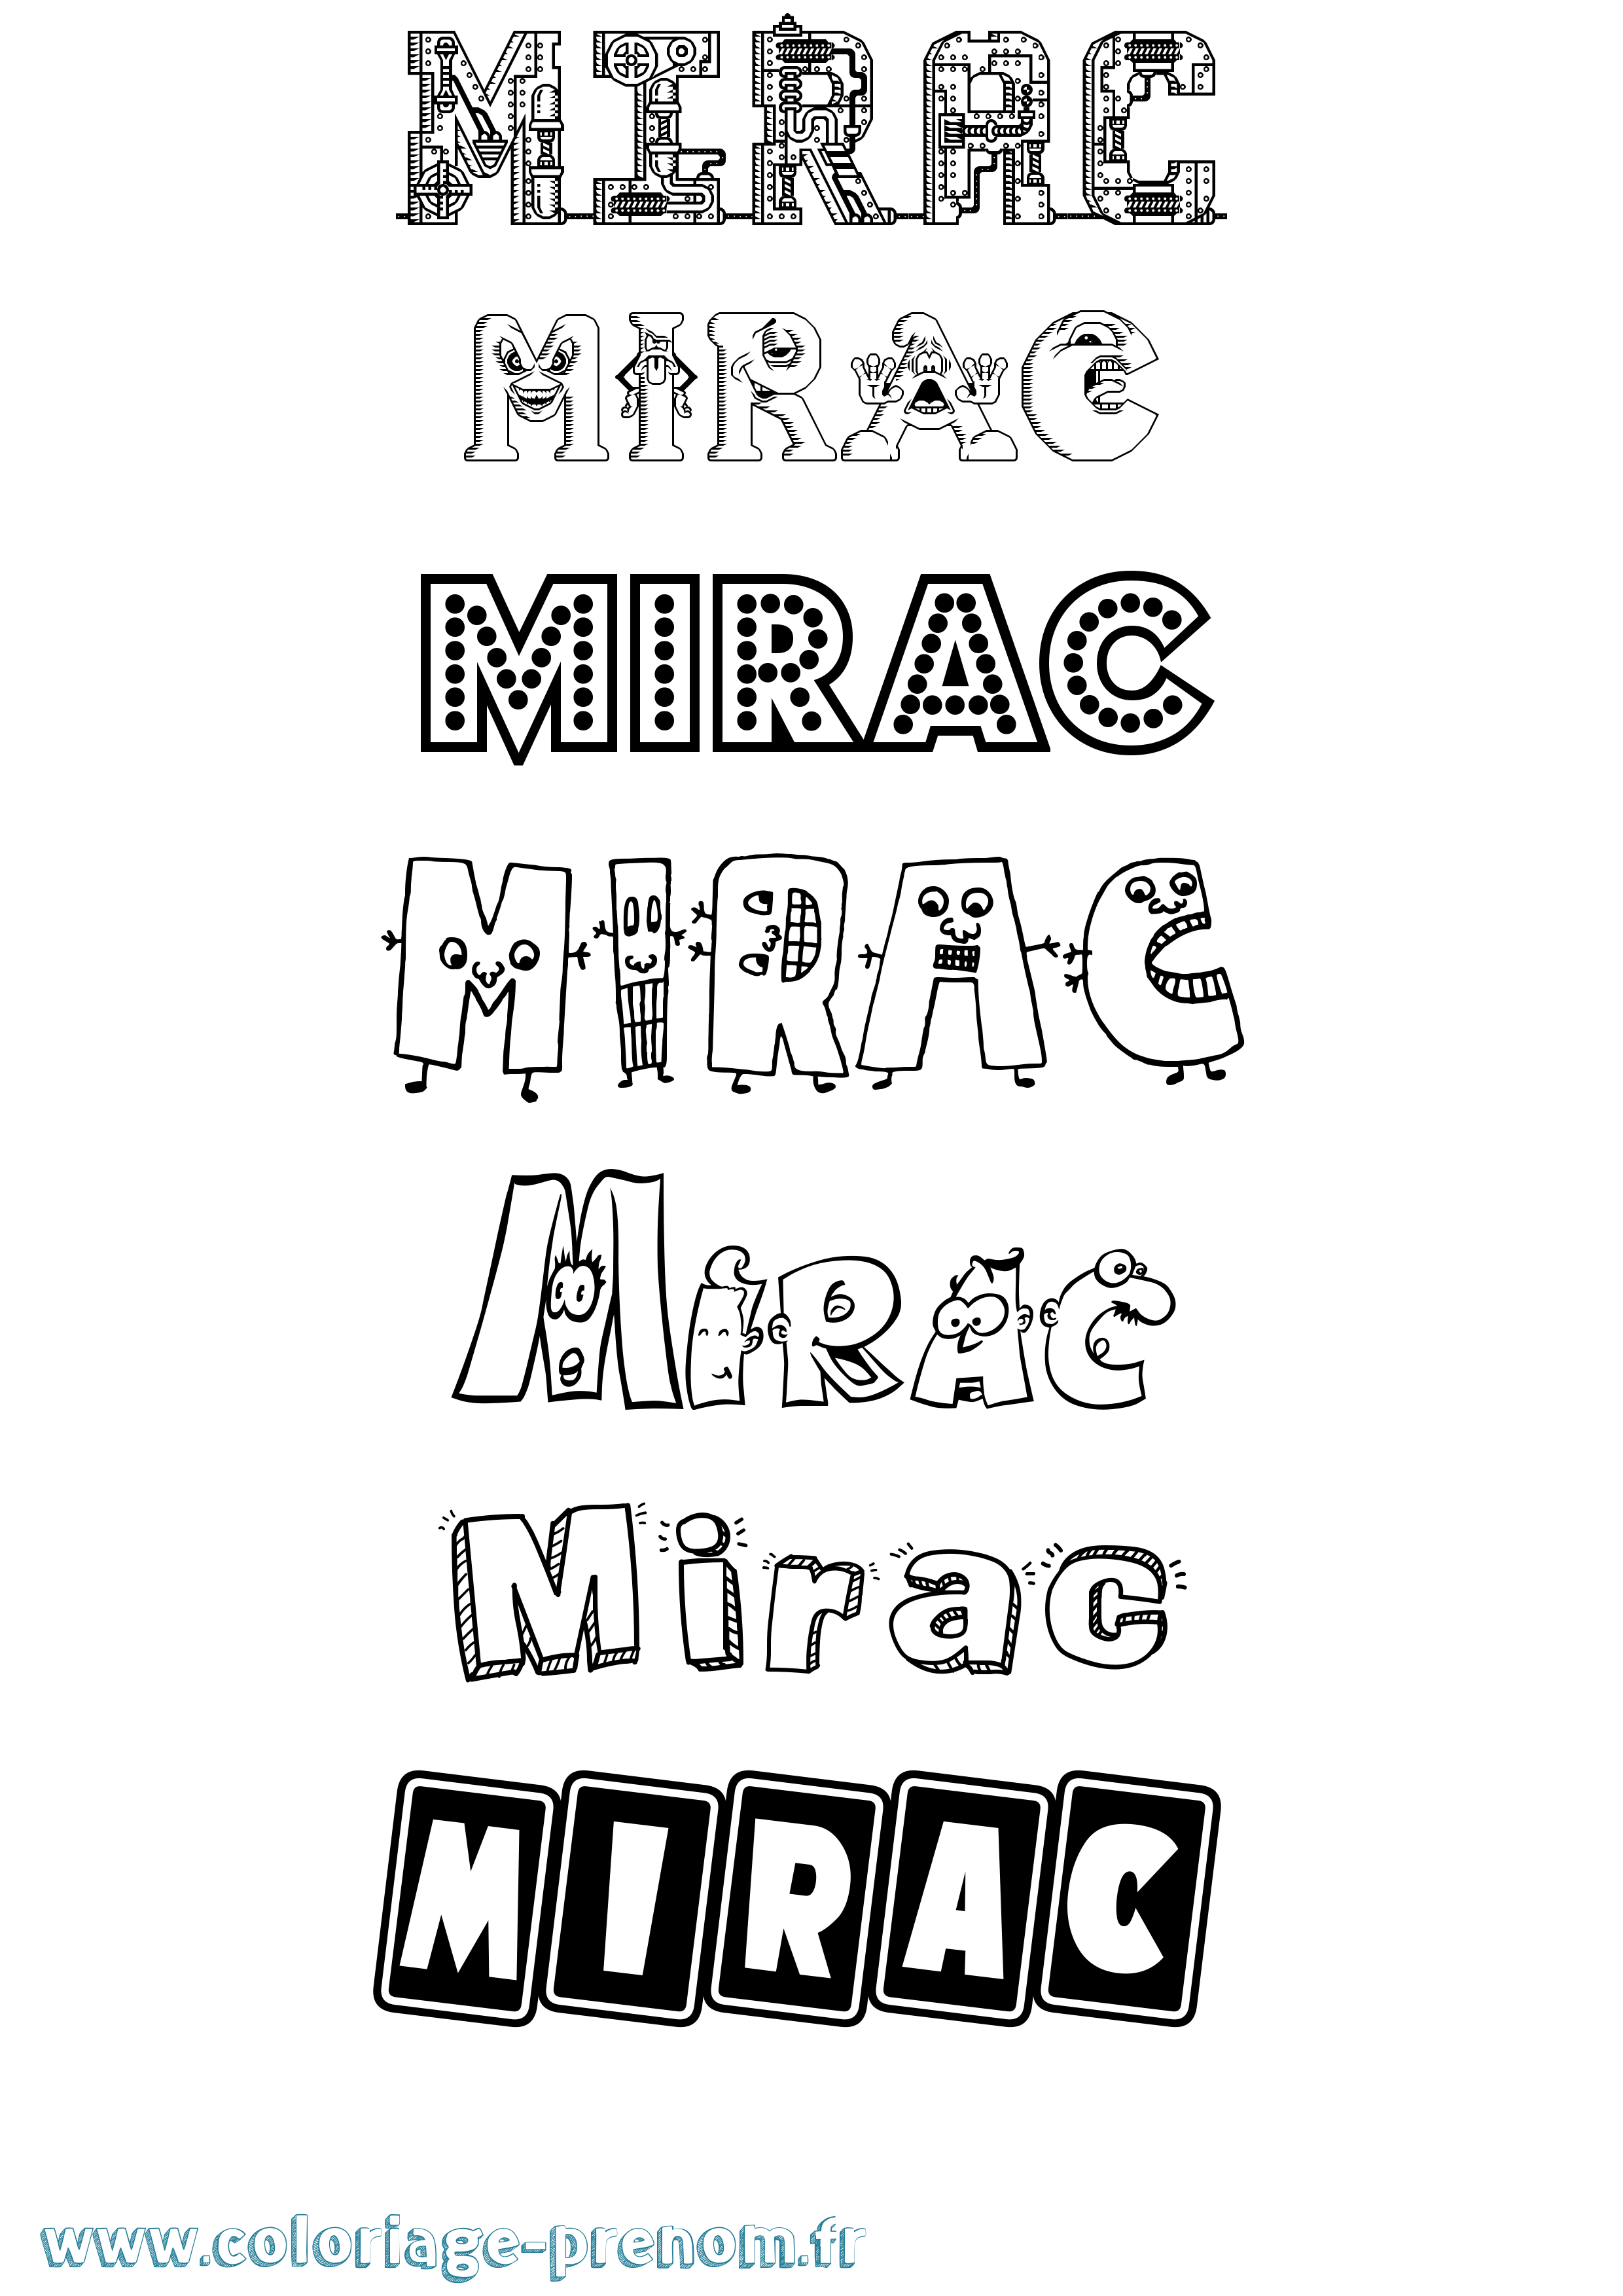 Coloriage prénom Mirac Fun